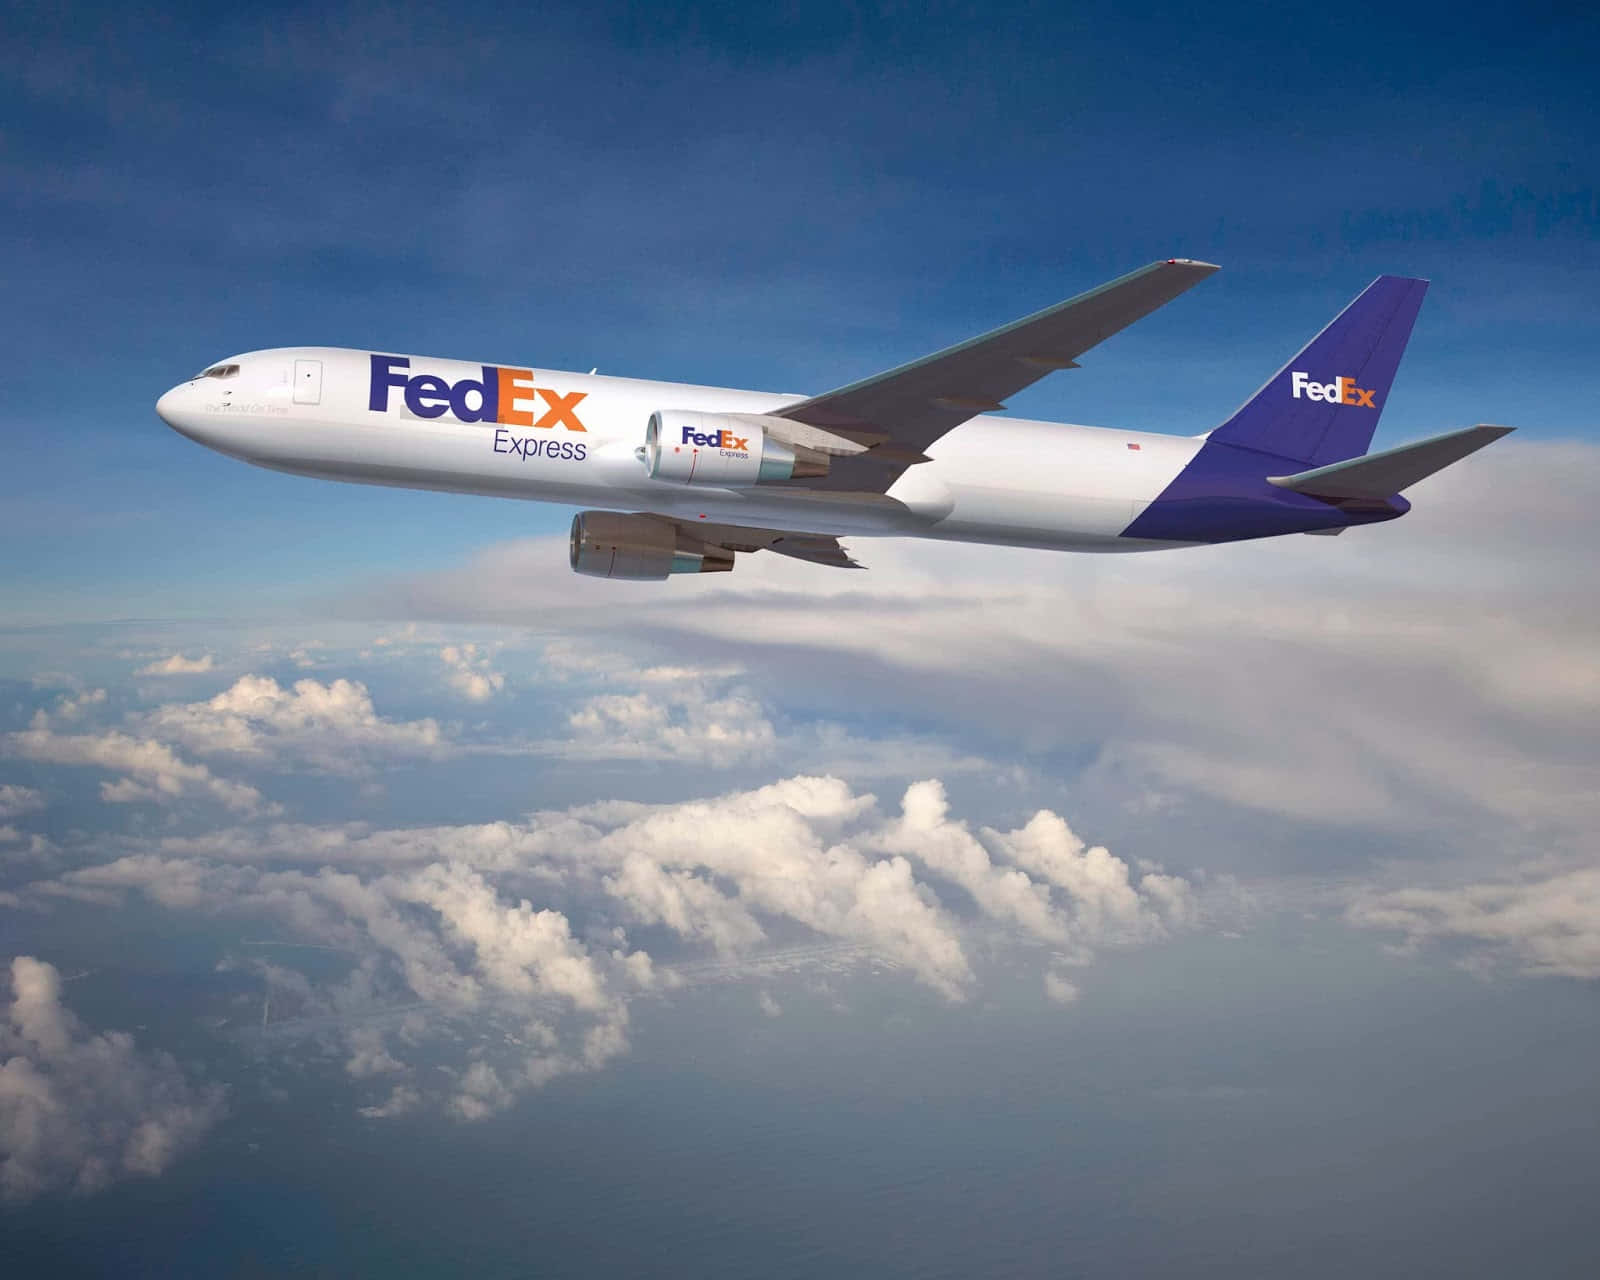 Fedex - A Jet Flying Through The Sky